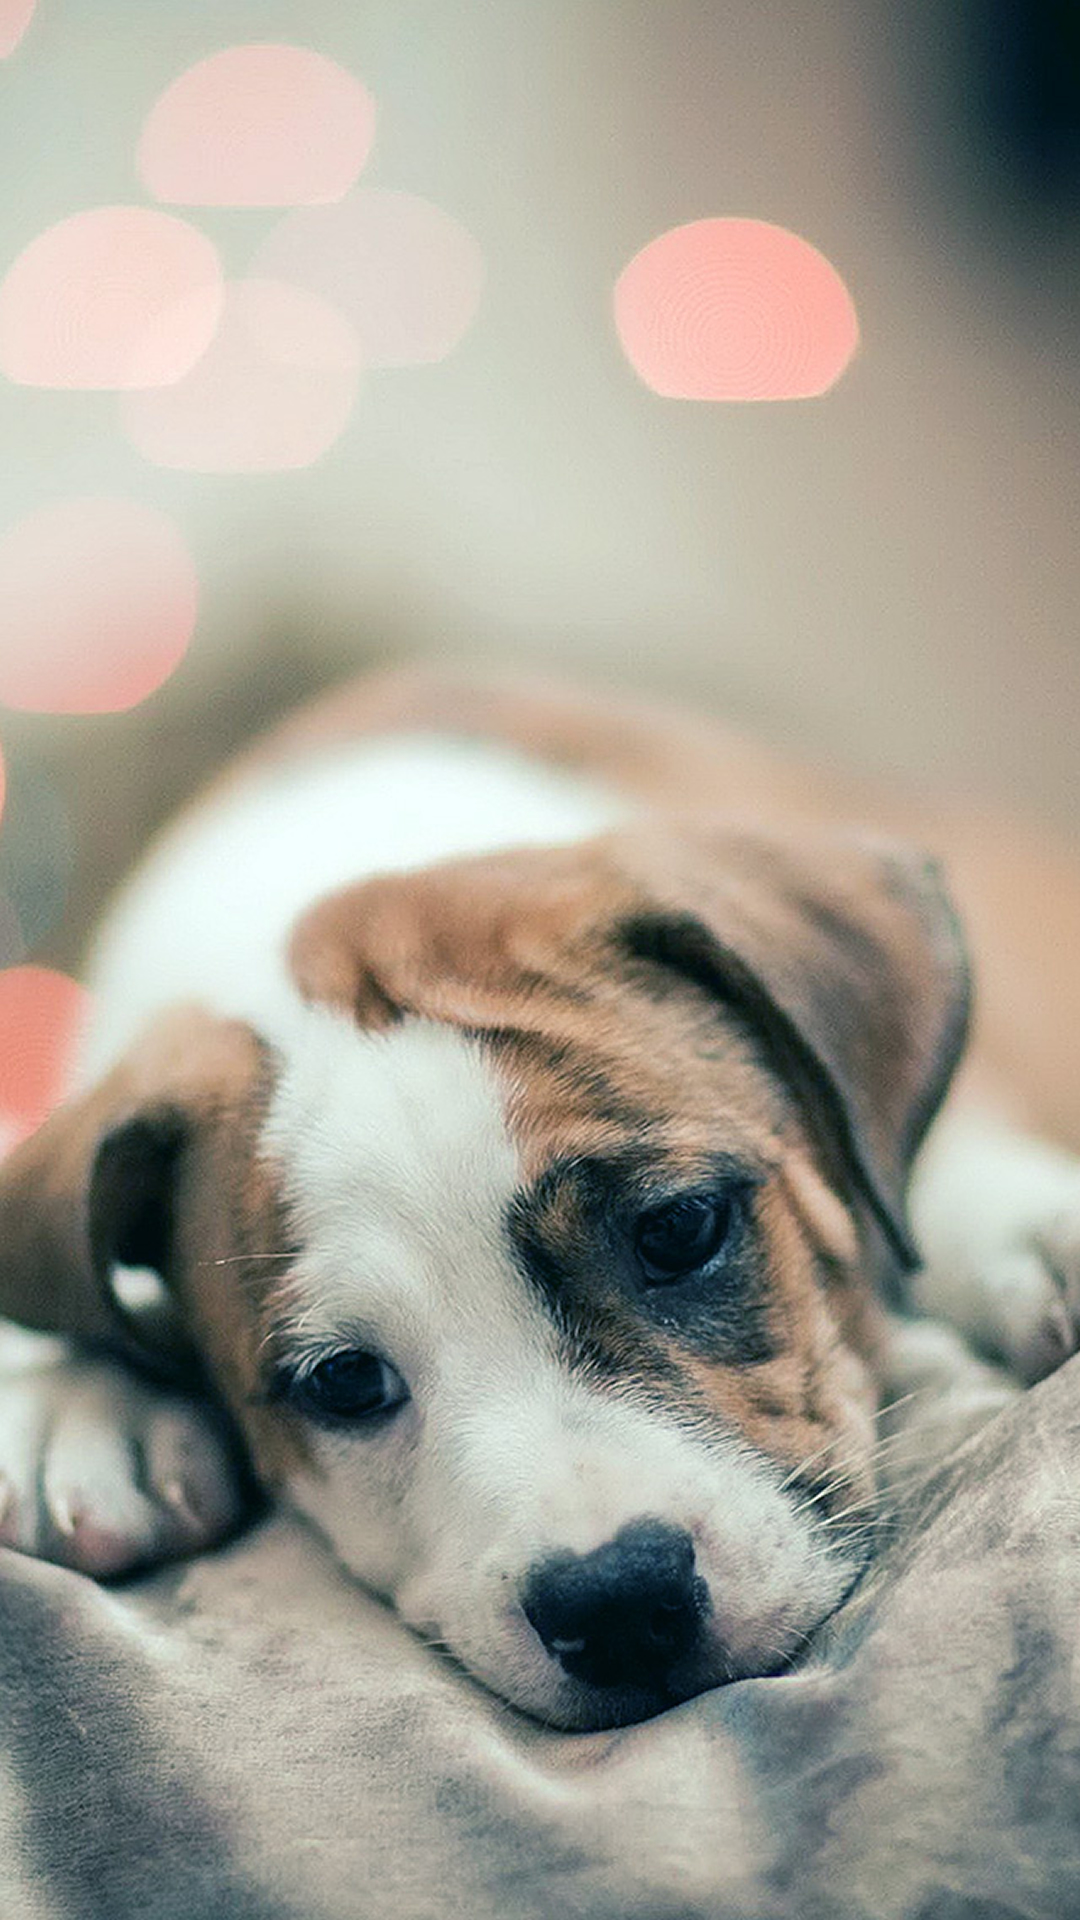 Sad-Puppy-Dog-Bokeh-Background-iPhone-6-wallpaper.